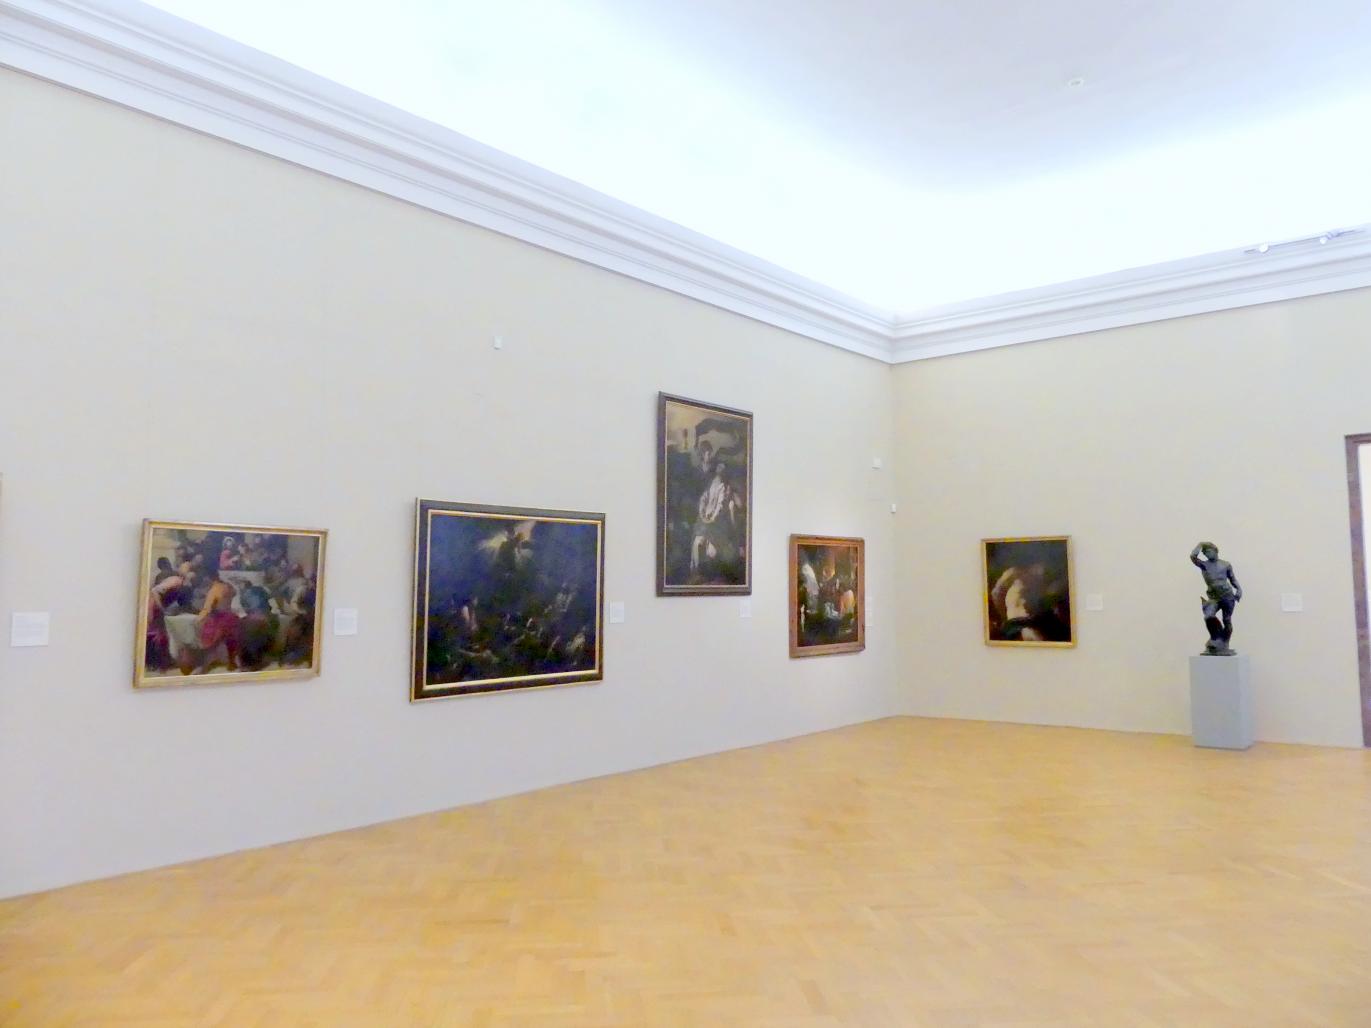 Prag, Nationalgalerie im Palais Sternberg, 2. Obergeschoss, Saal 6, Bild 3/4